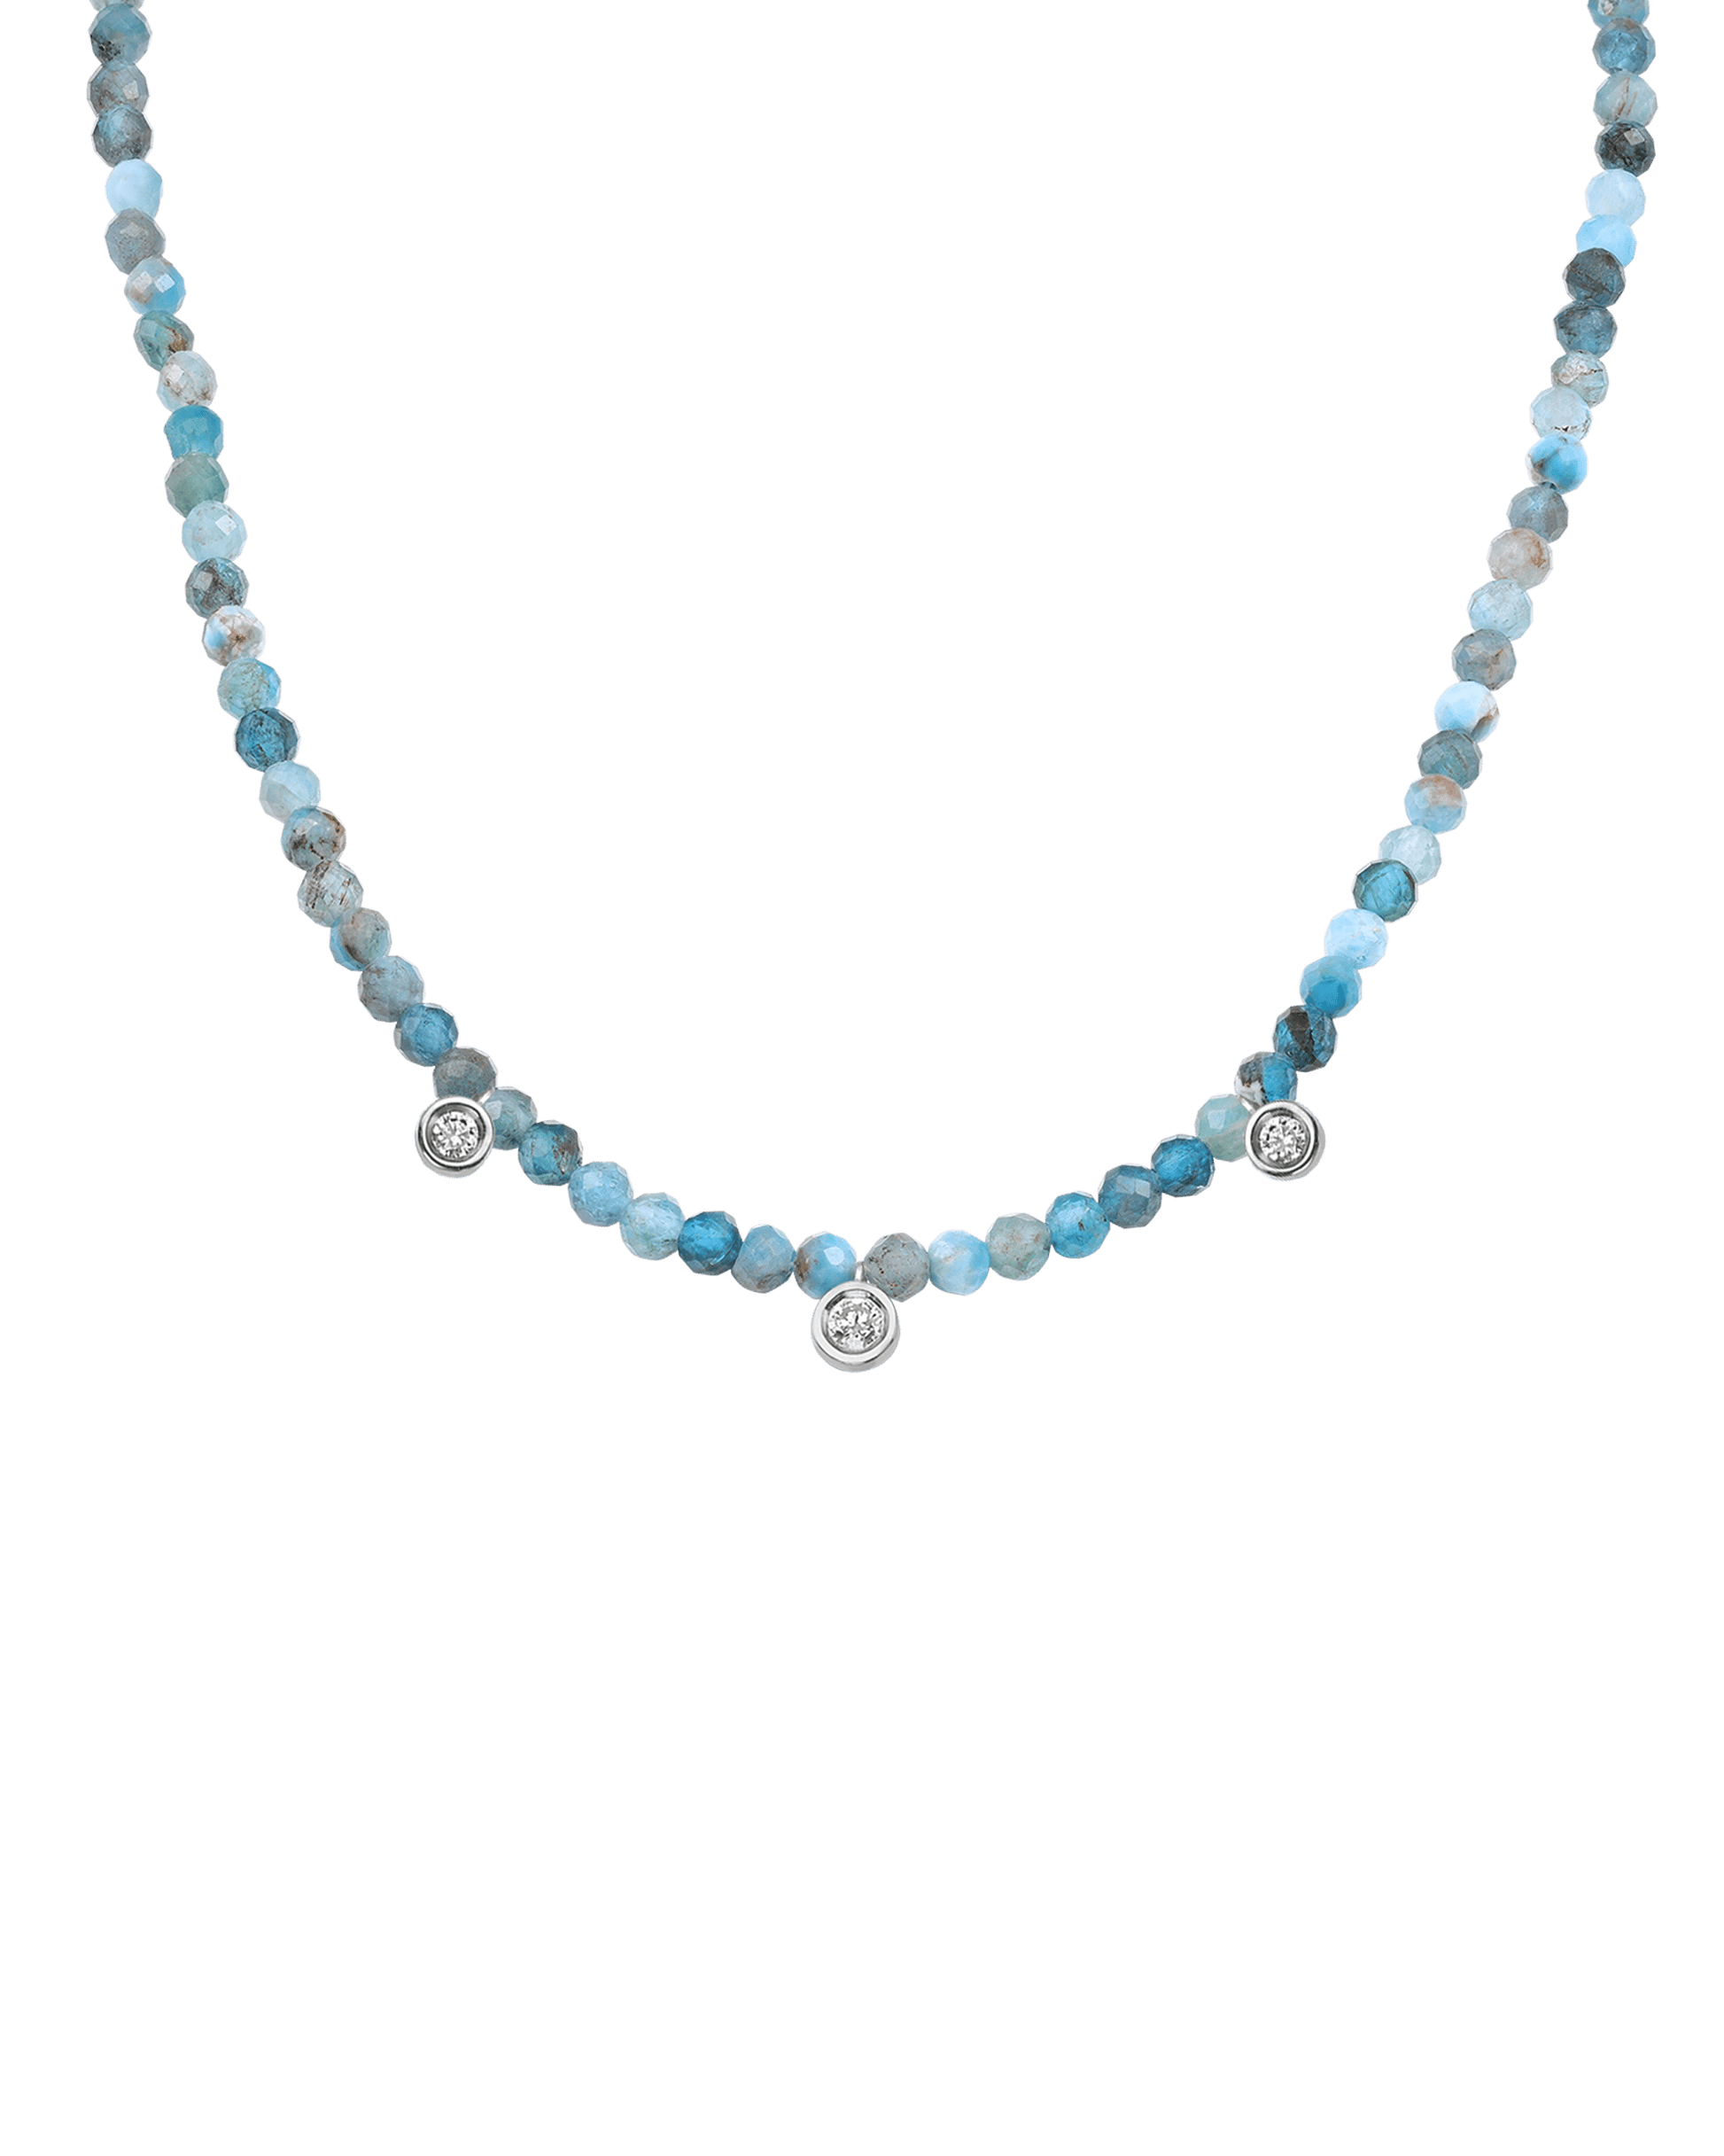 Purple Amethyst Gemstone & Three diamonds Necklace - 14K Yellow Gold Necklaces magal-dev 